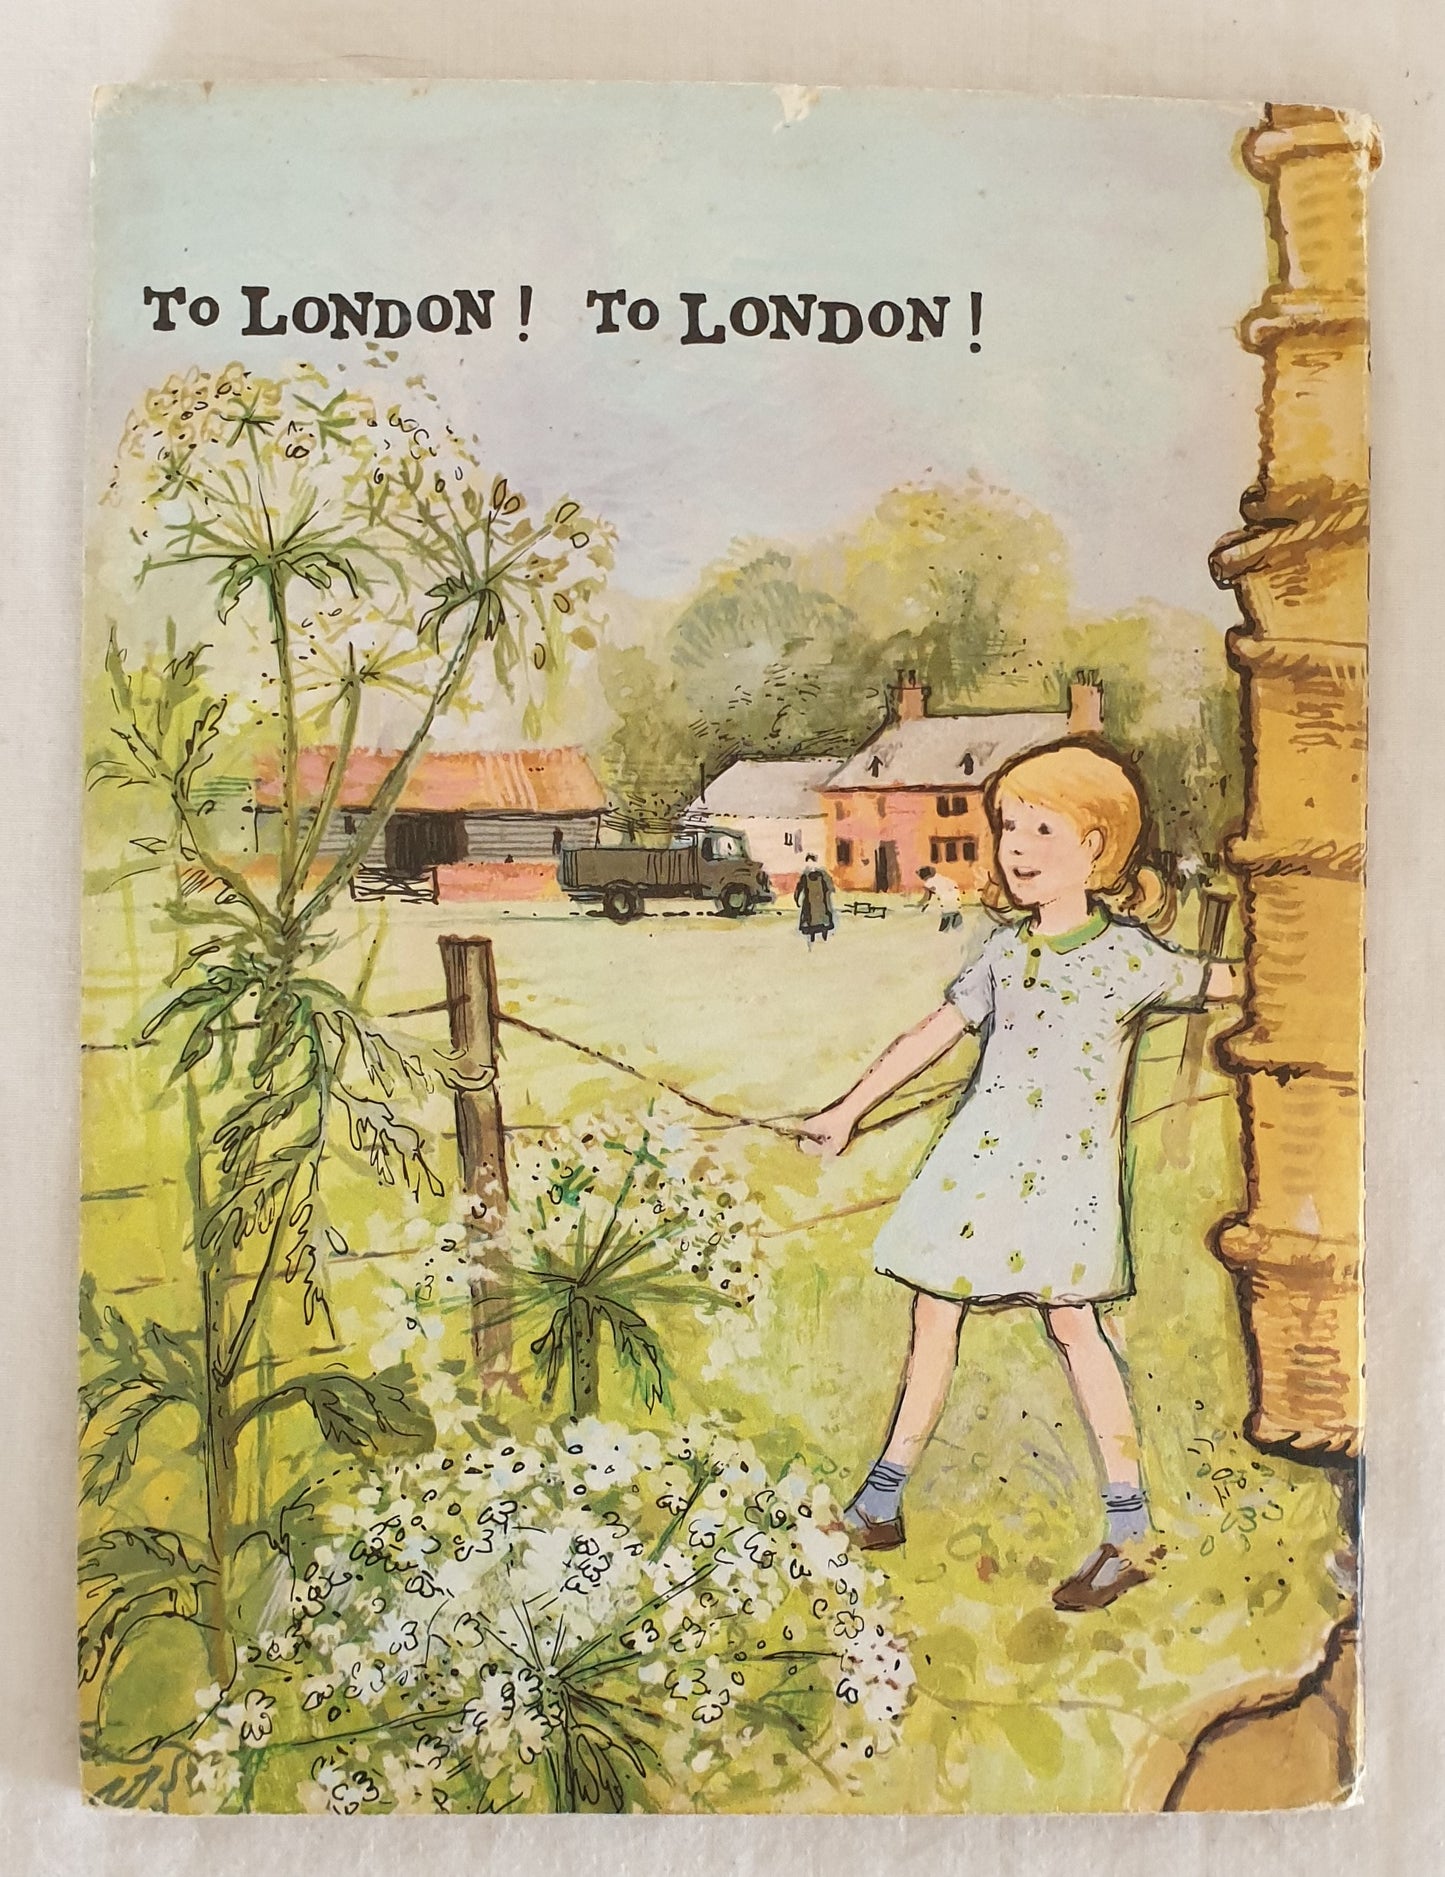 To London! To London! by Barbara Willard